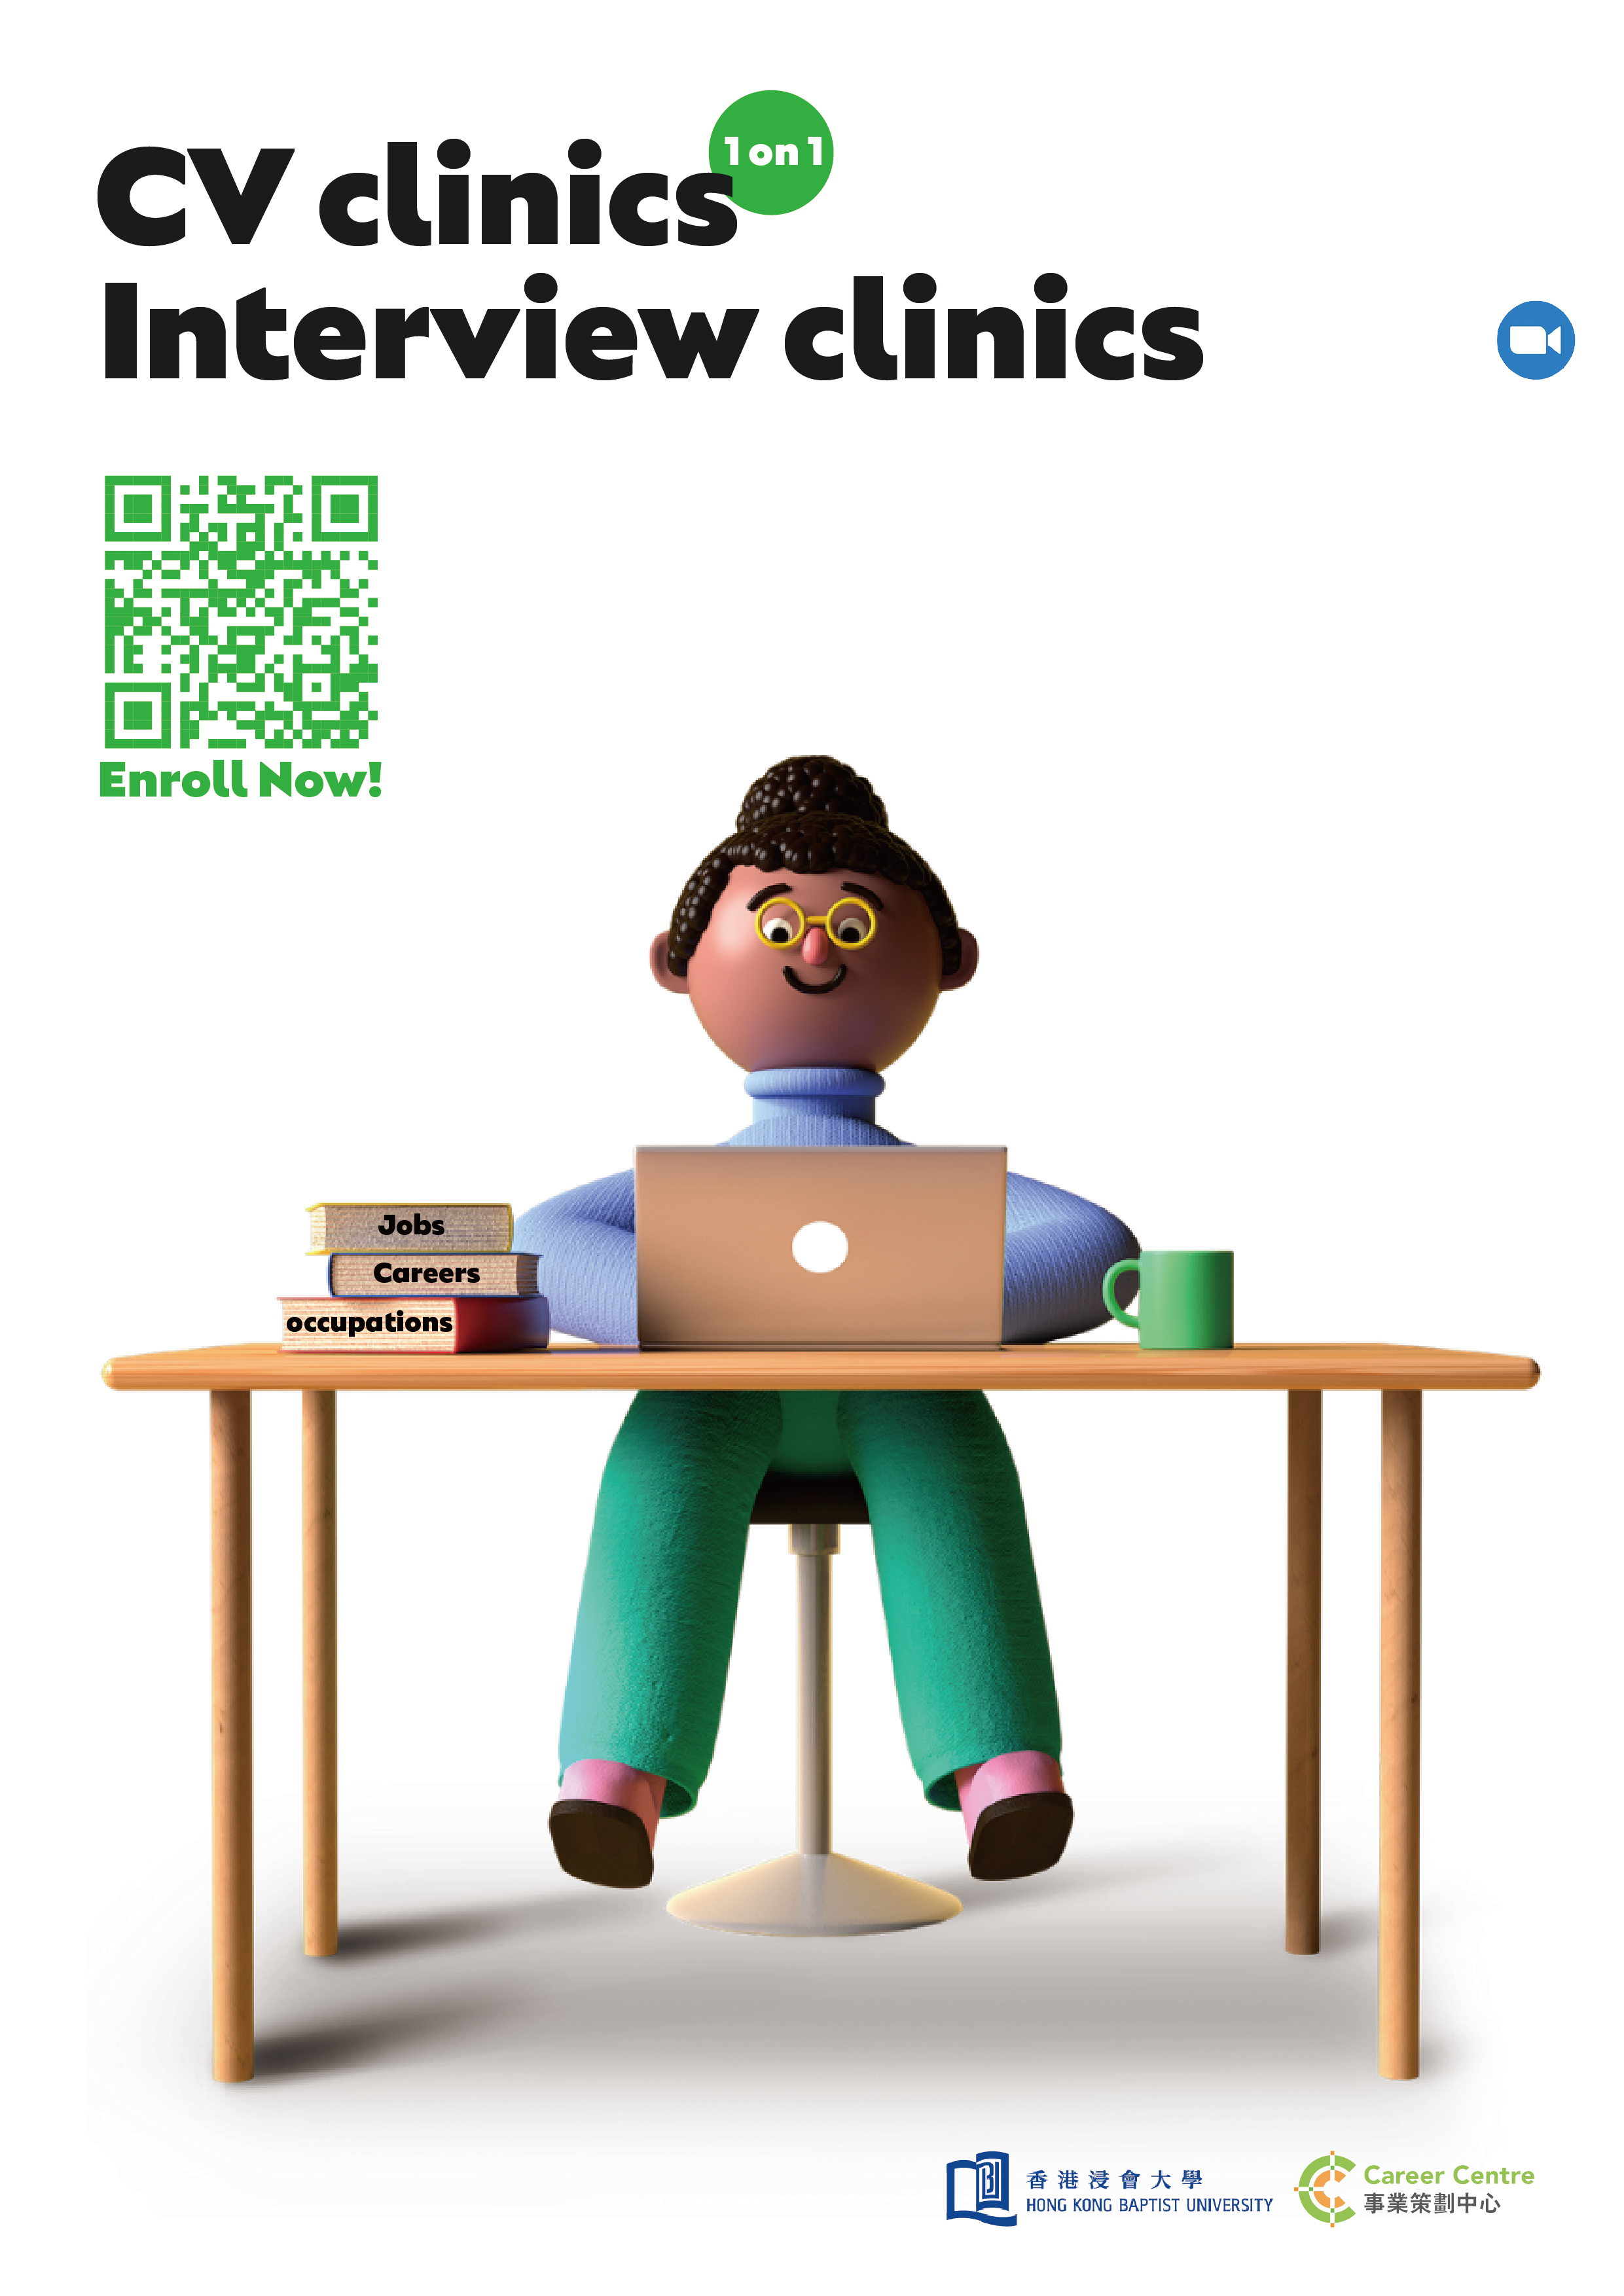 CV clinics and Interview clinics